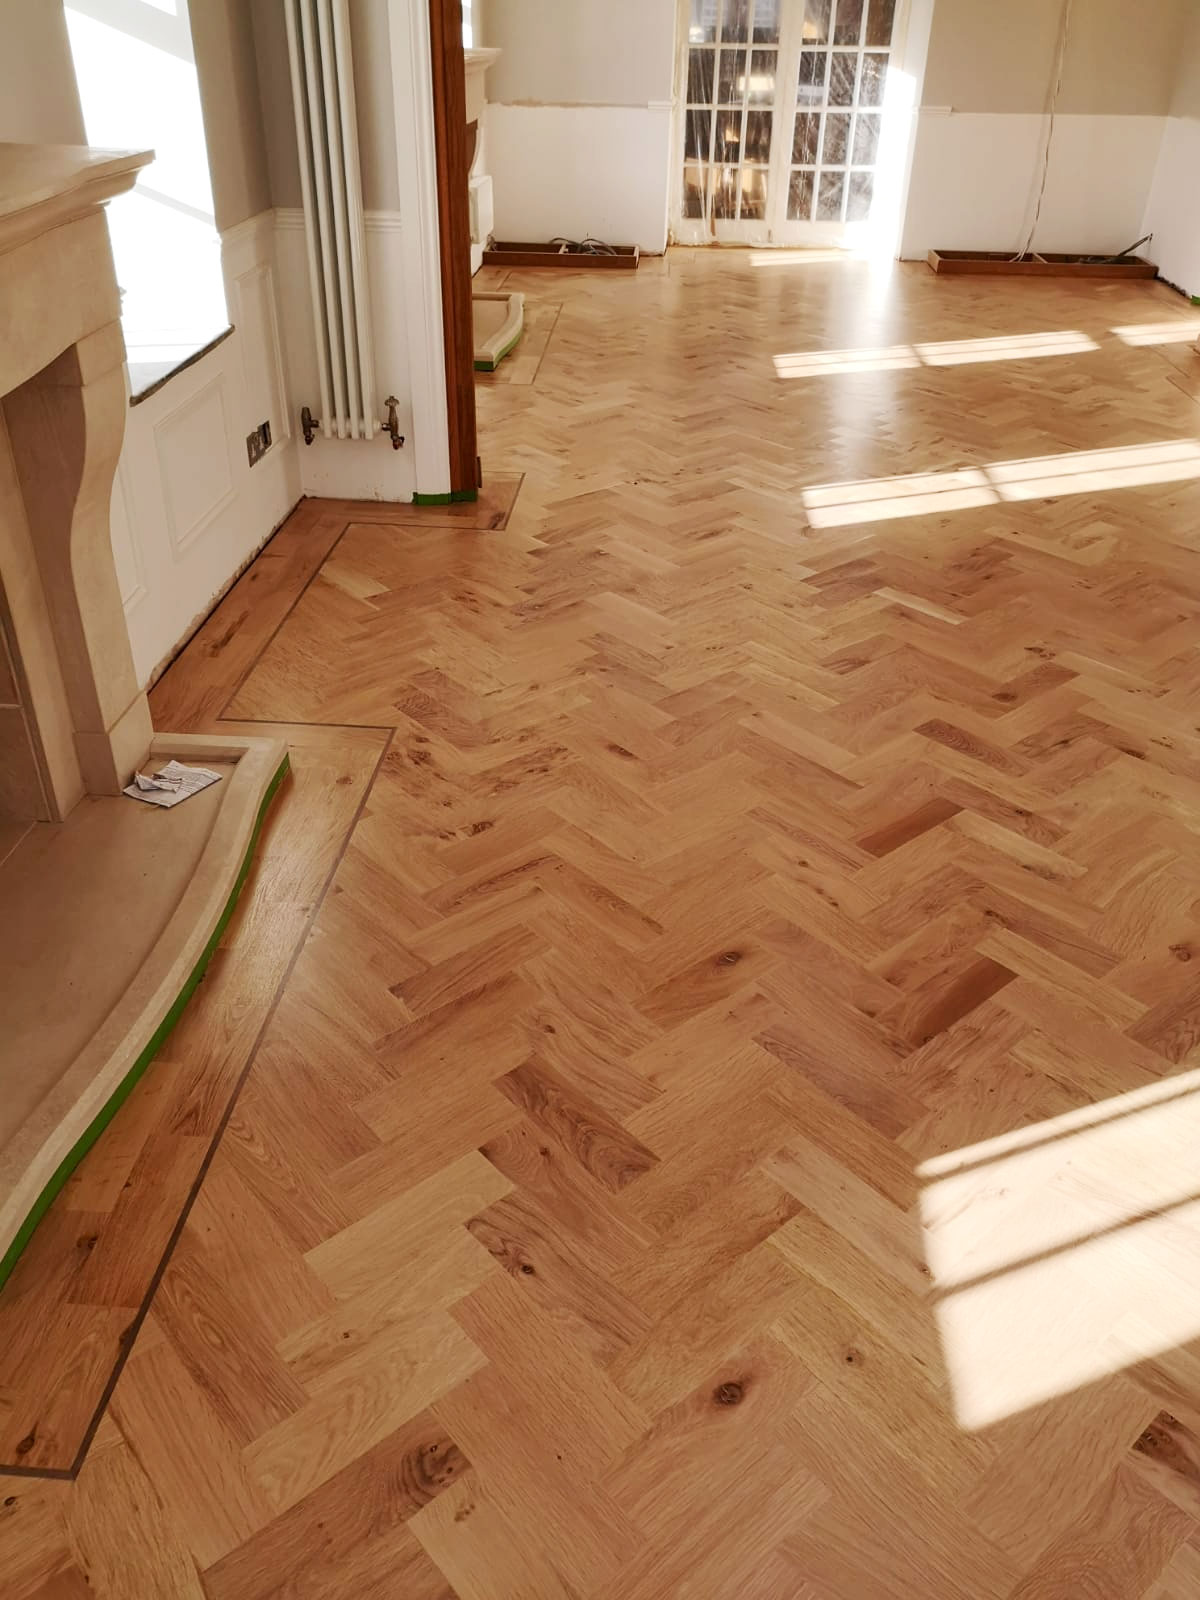 New oak parquet flooring